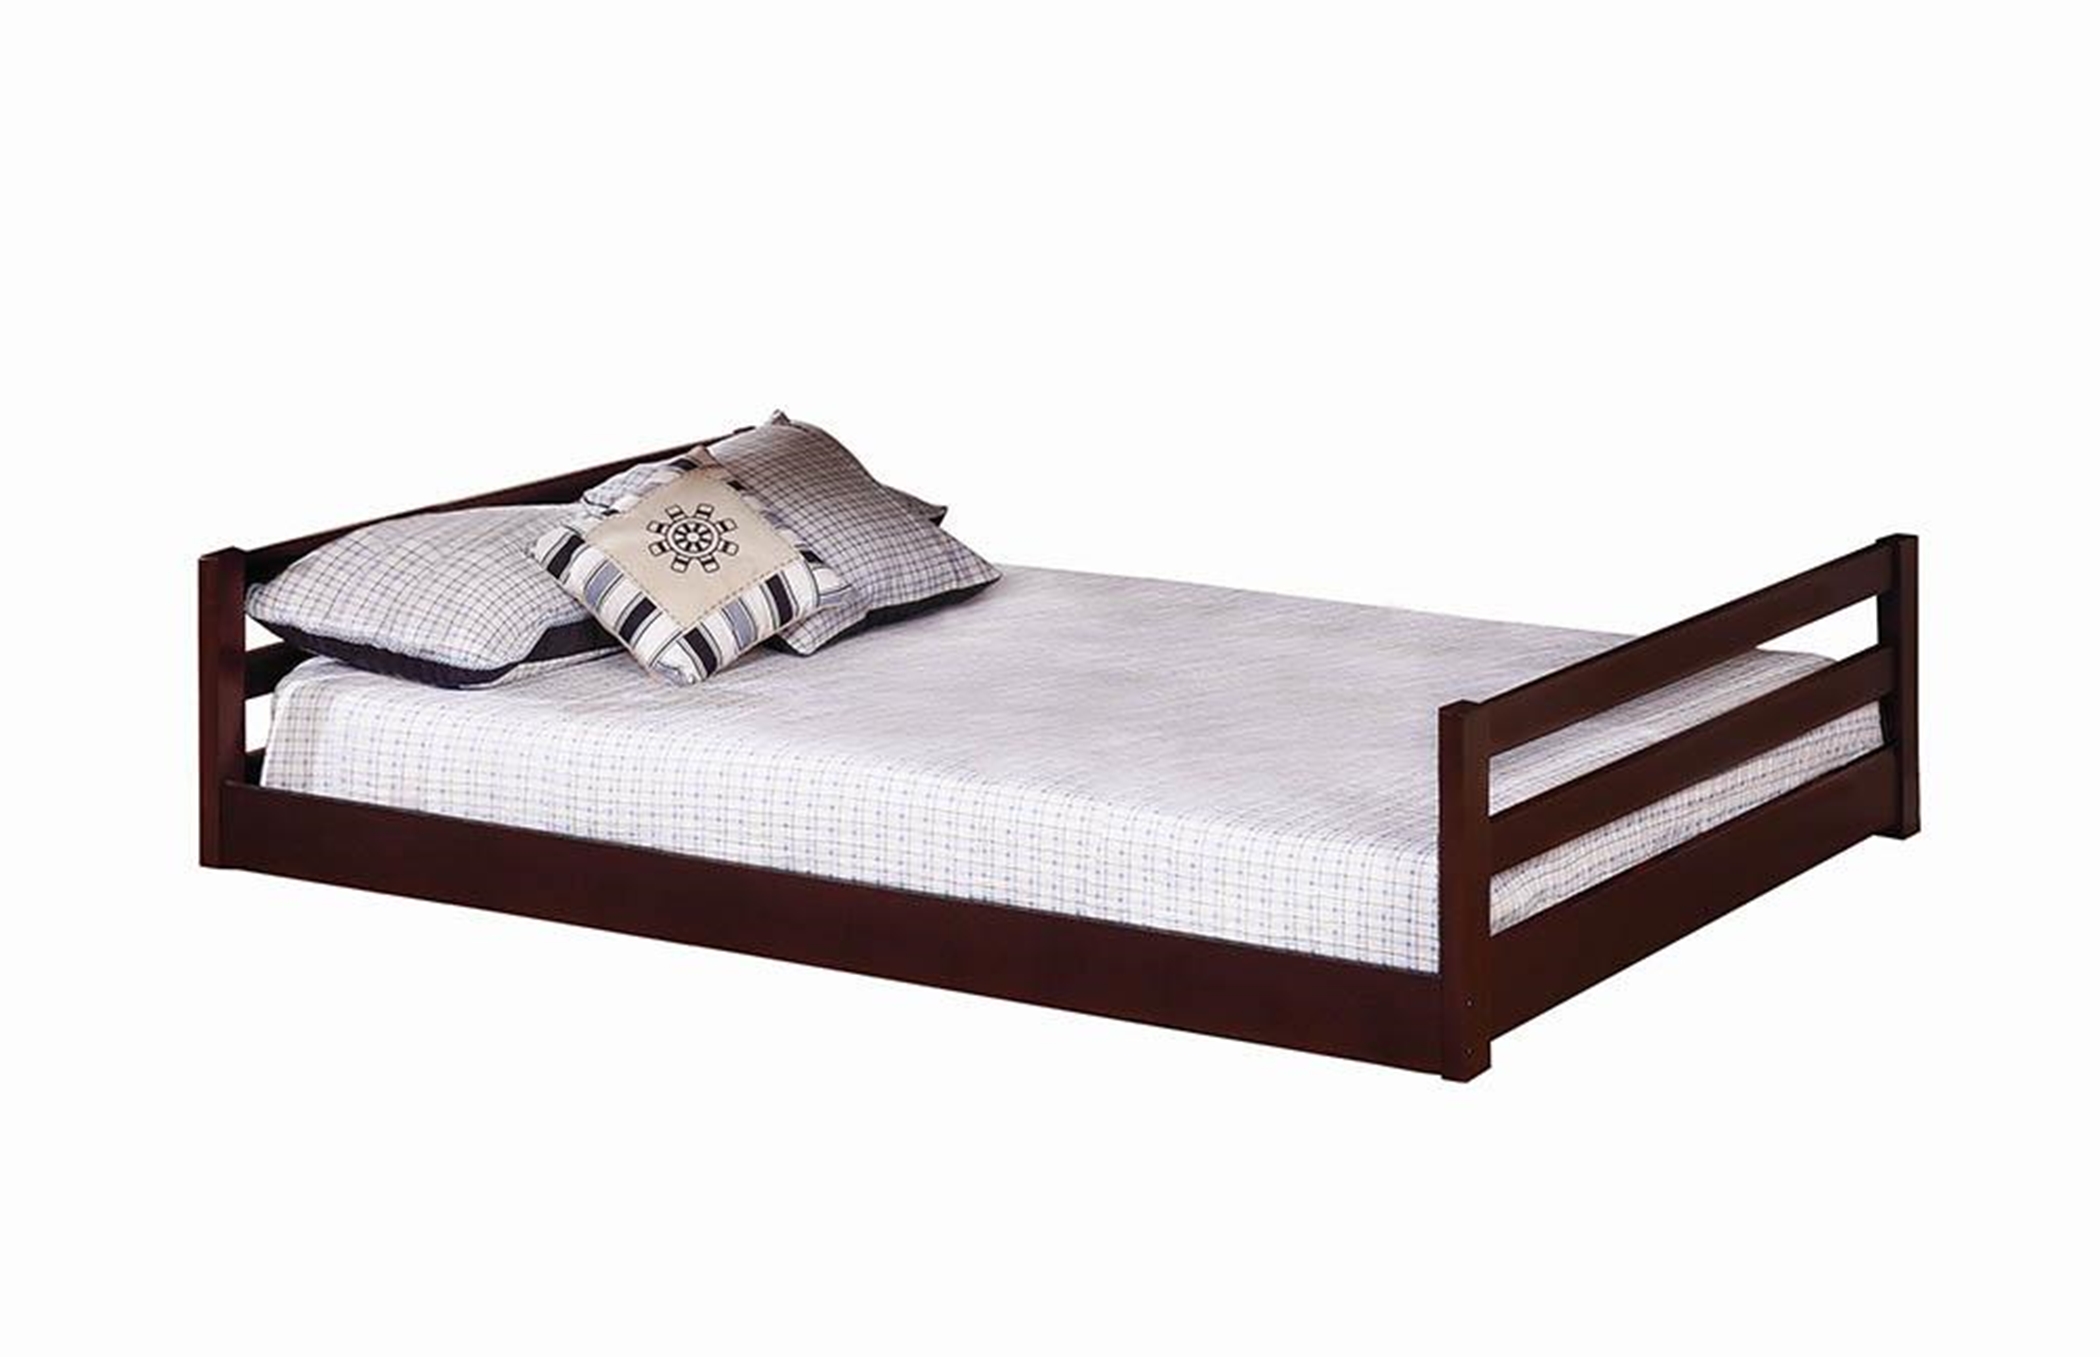 Sandler Capp. Three-Bed Bunk Bed - Click Image to Close